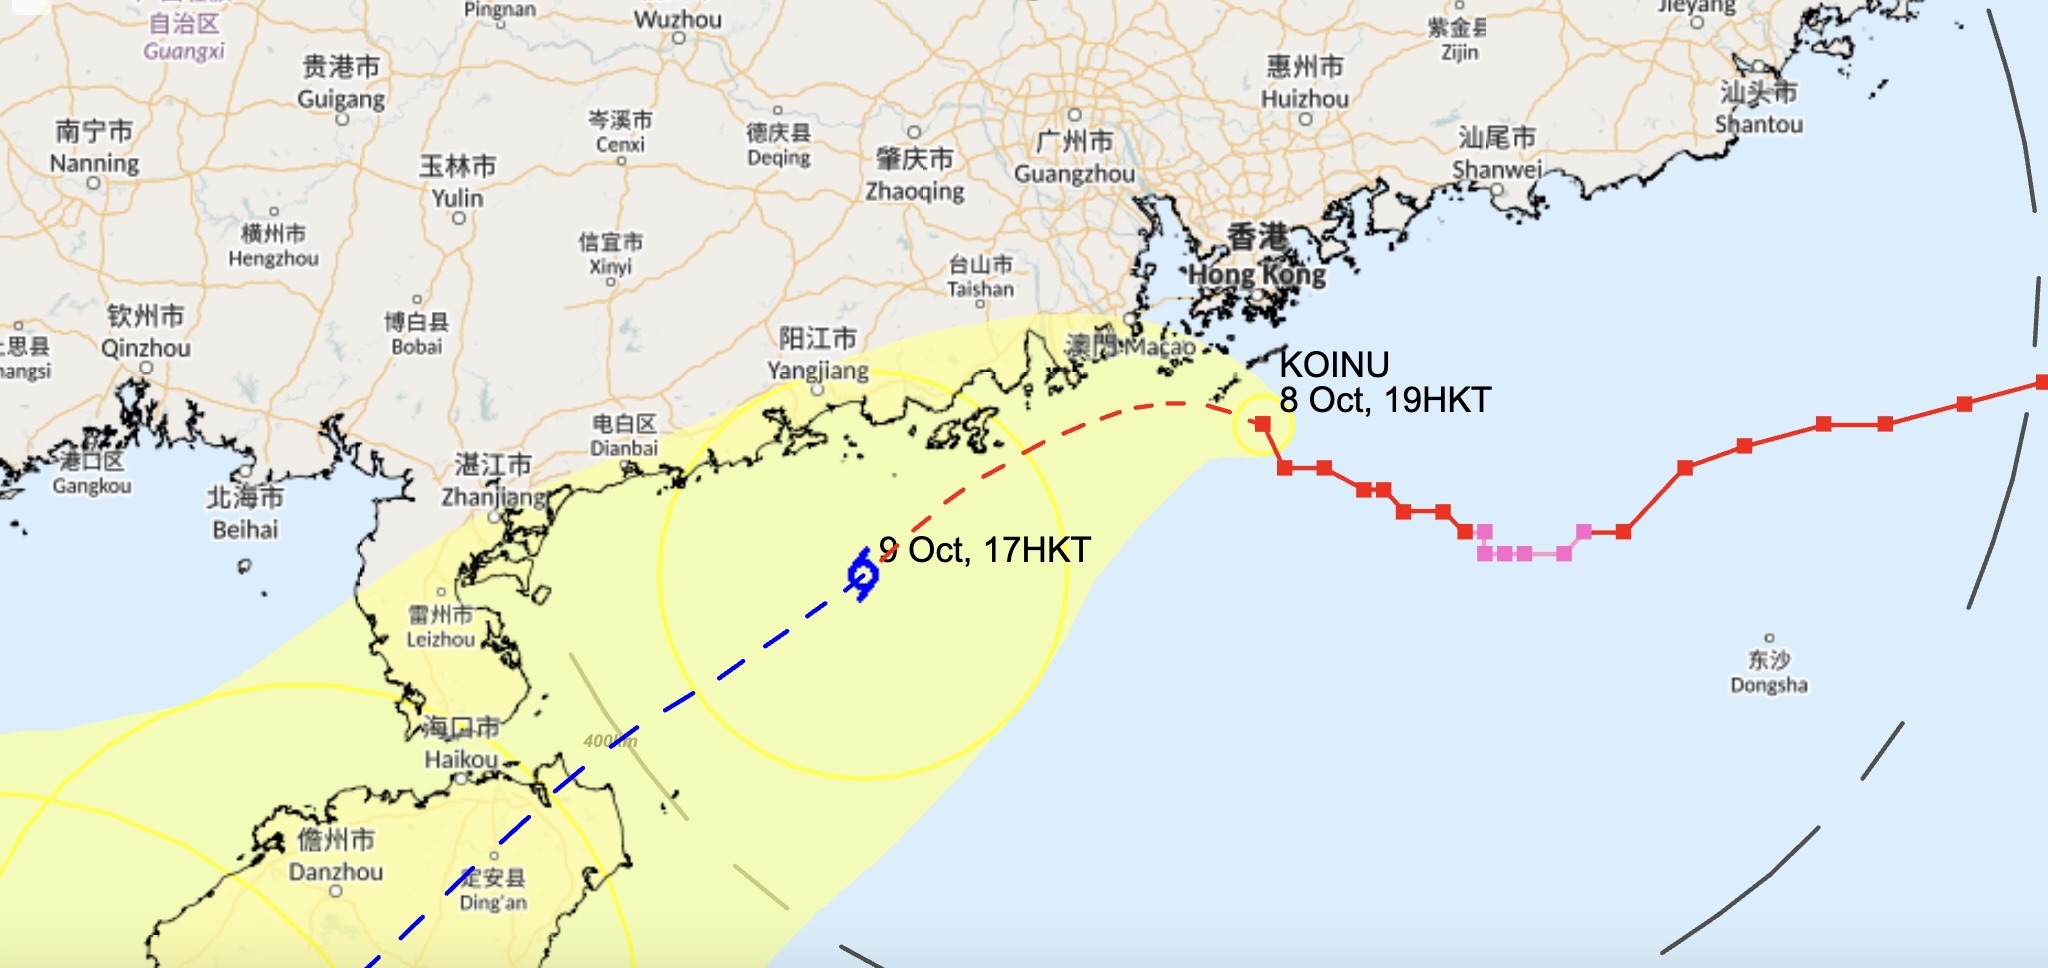 current track of typhoon koinu